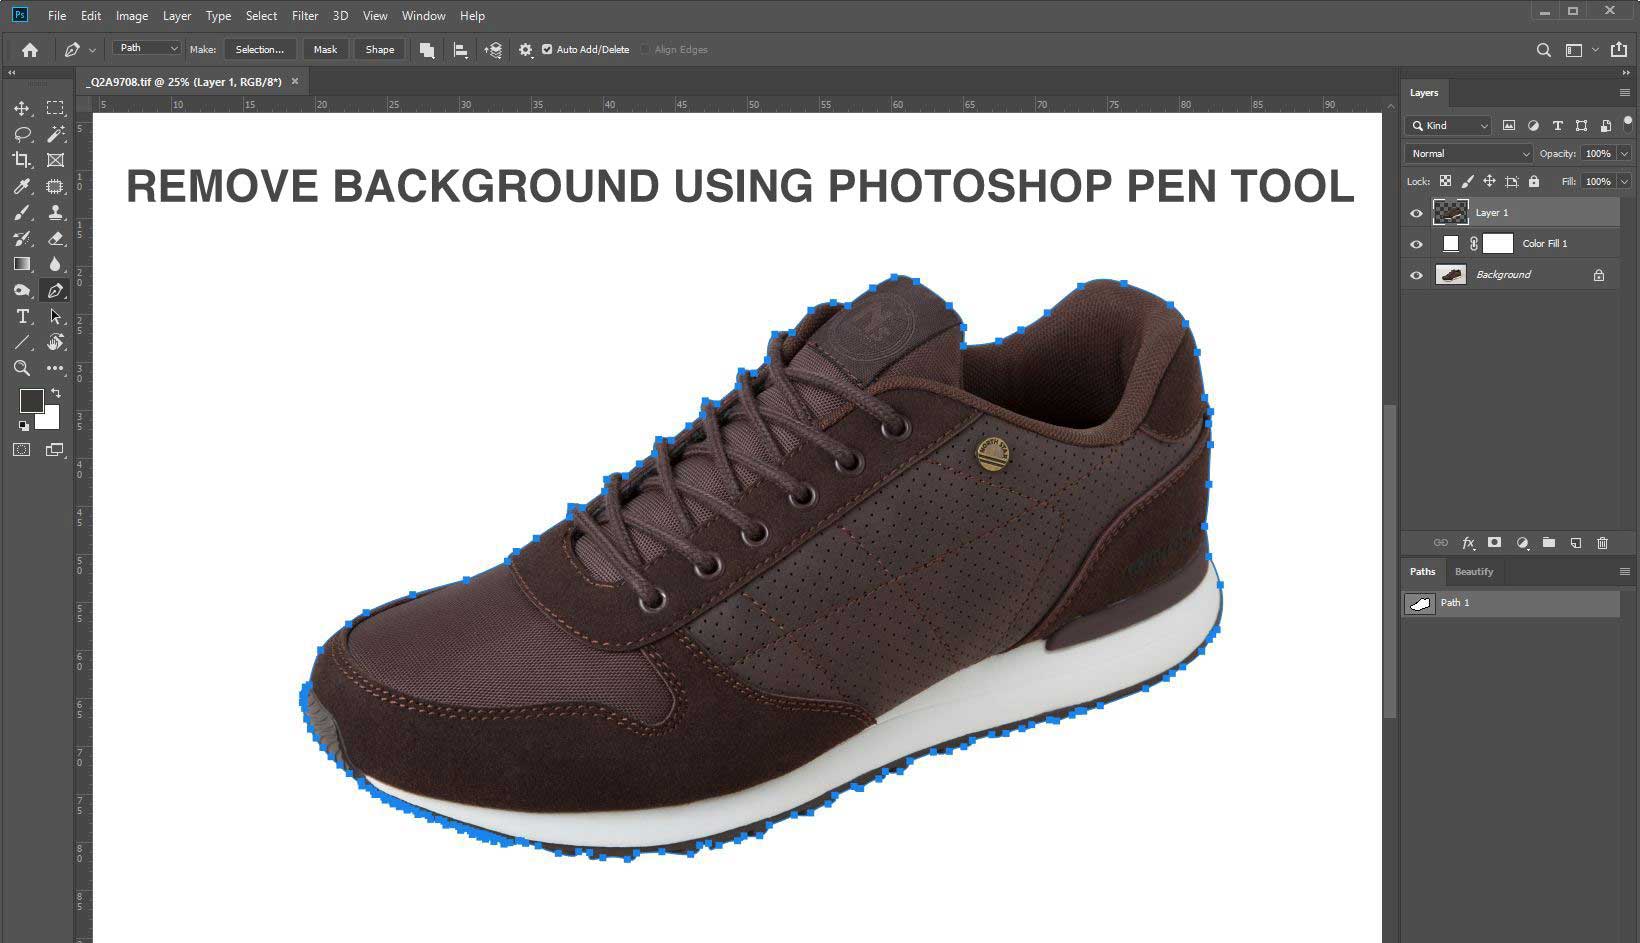 photoshop pen tool